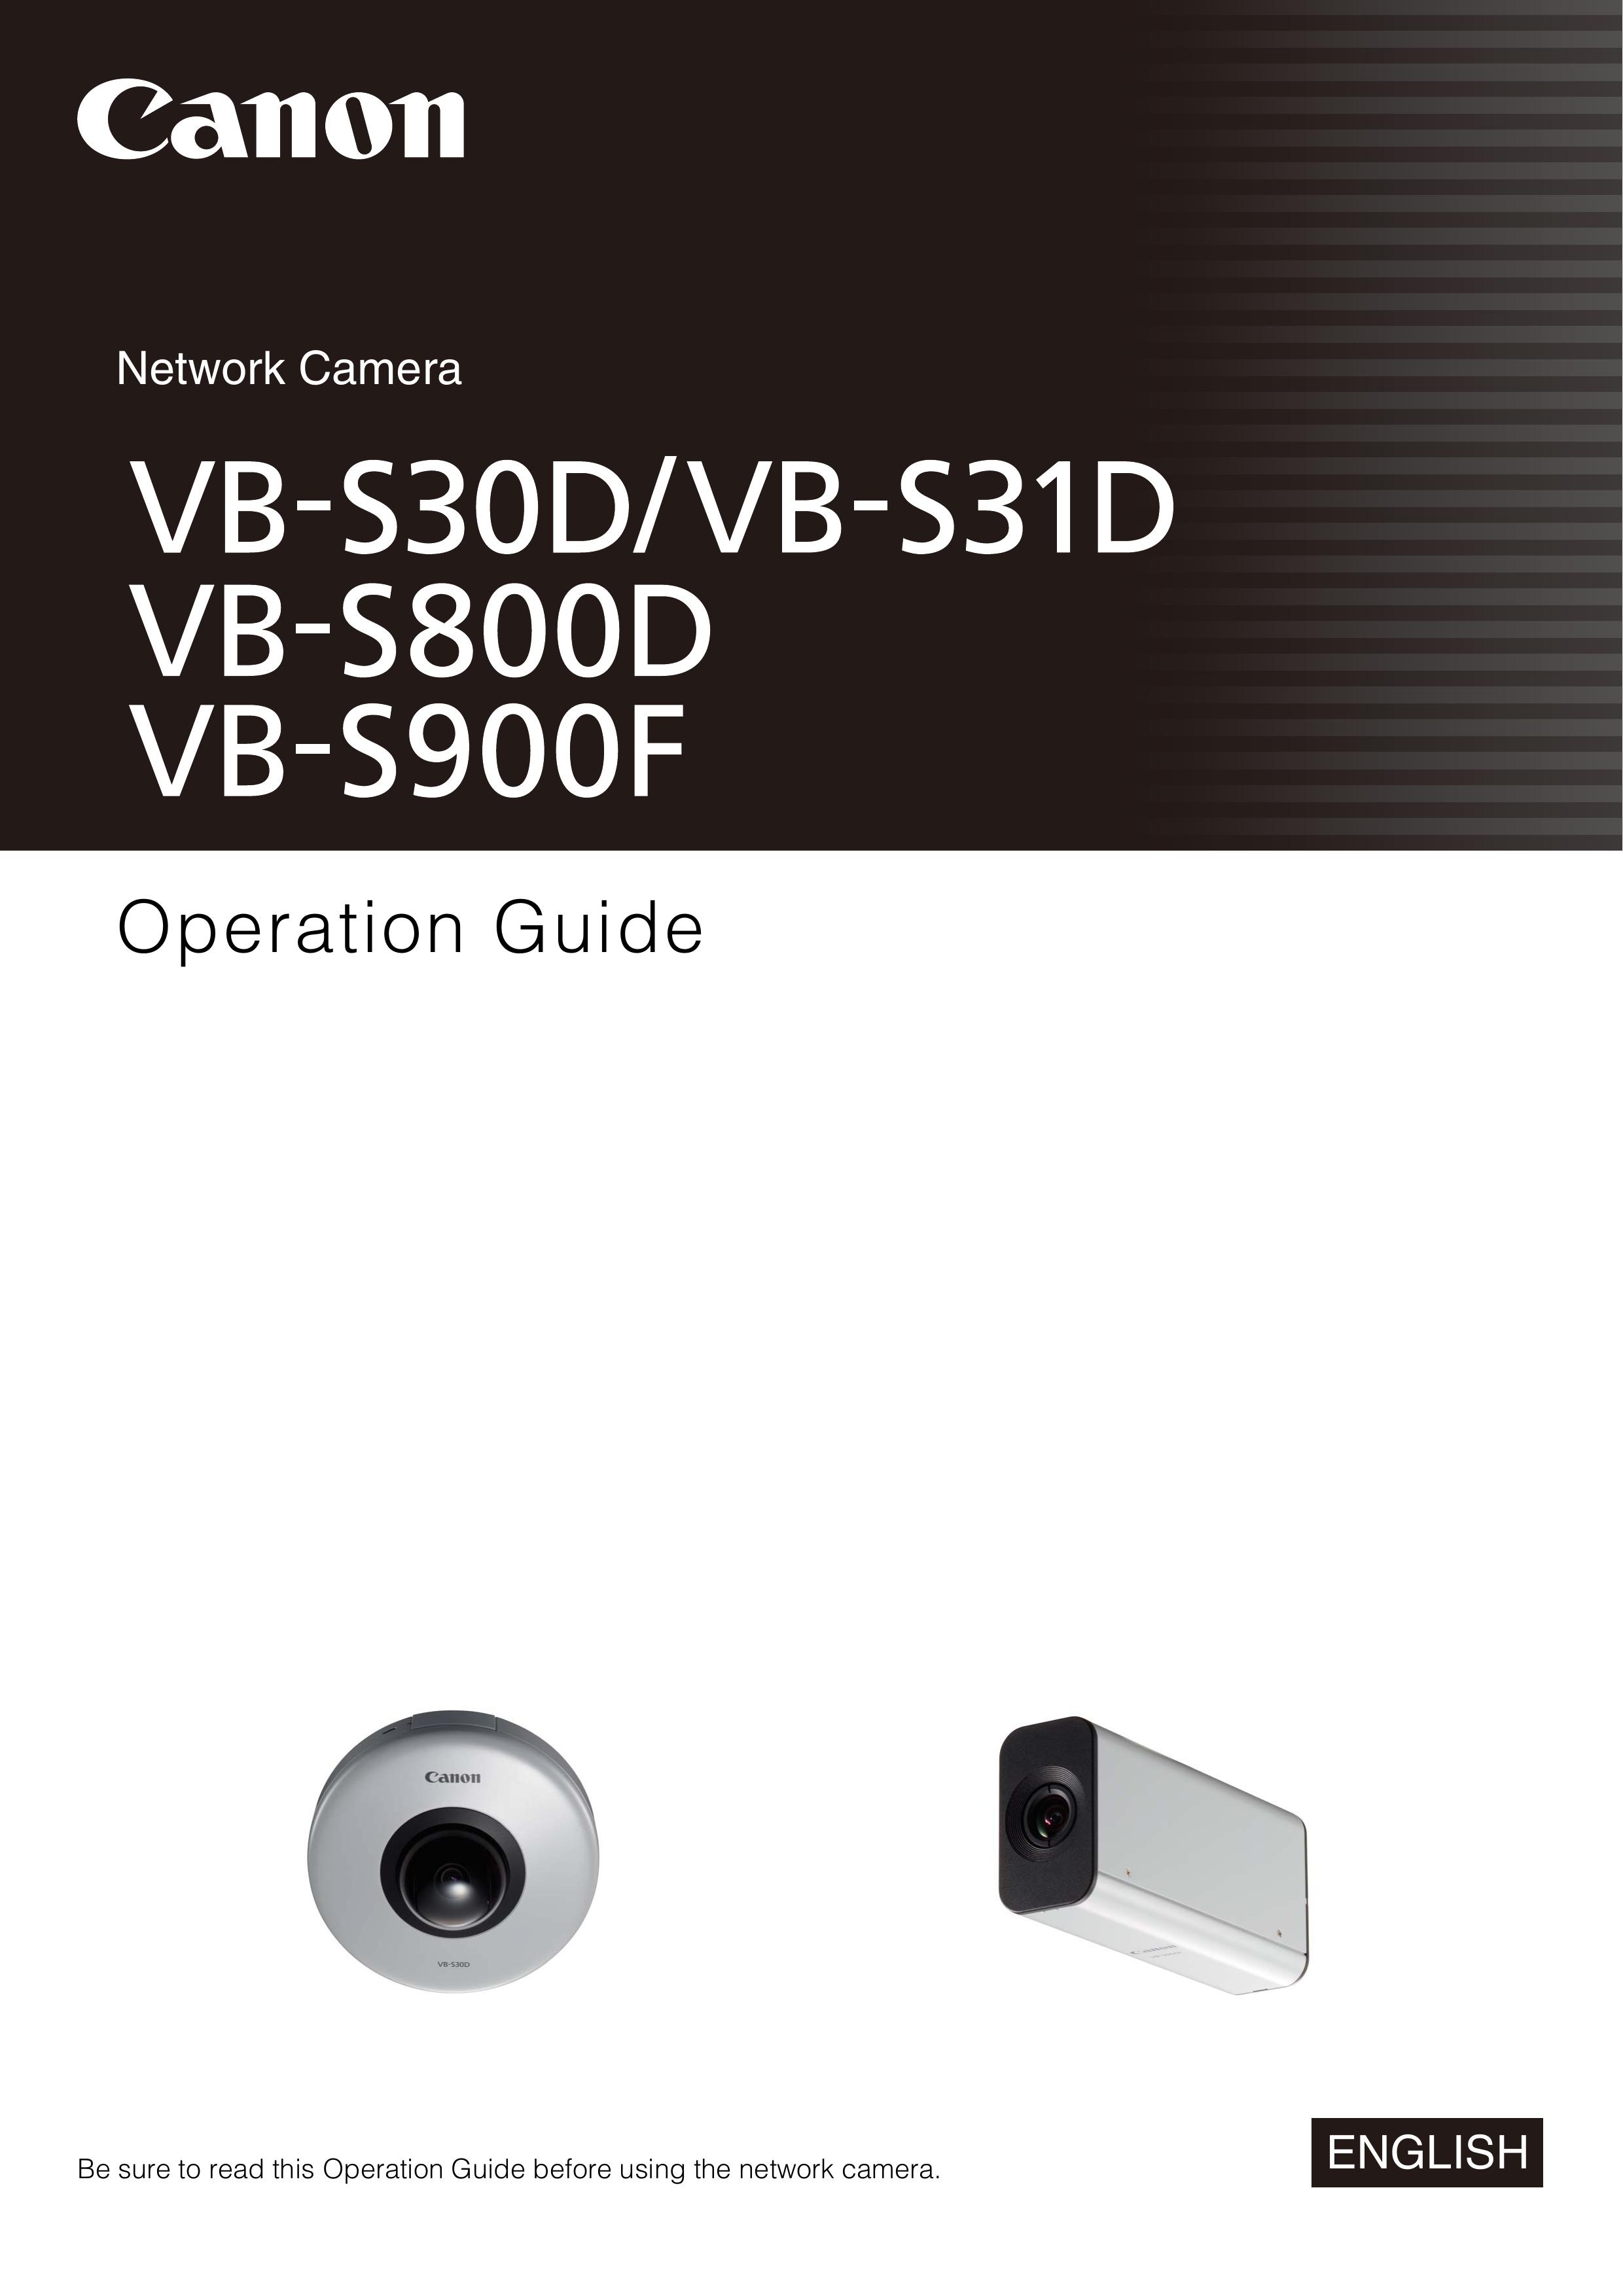 Canon vb-s900f Security Camera User Manual